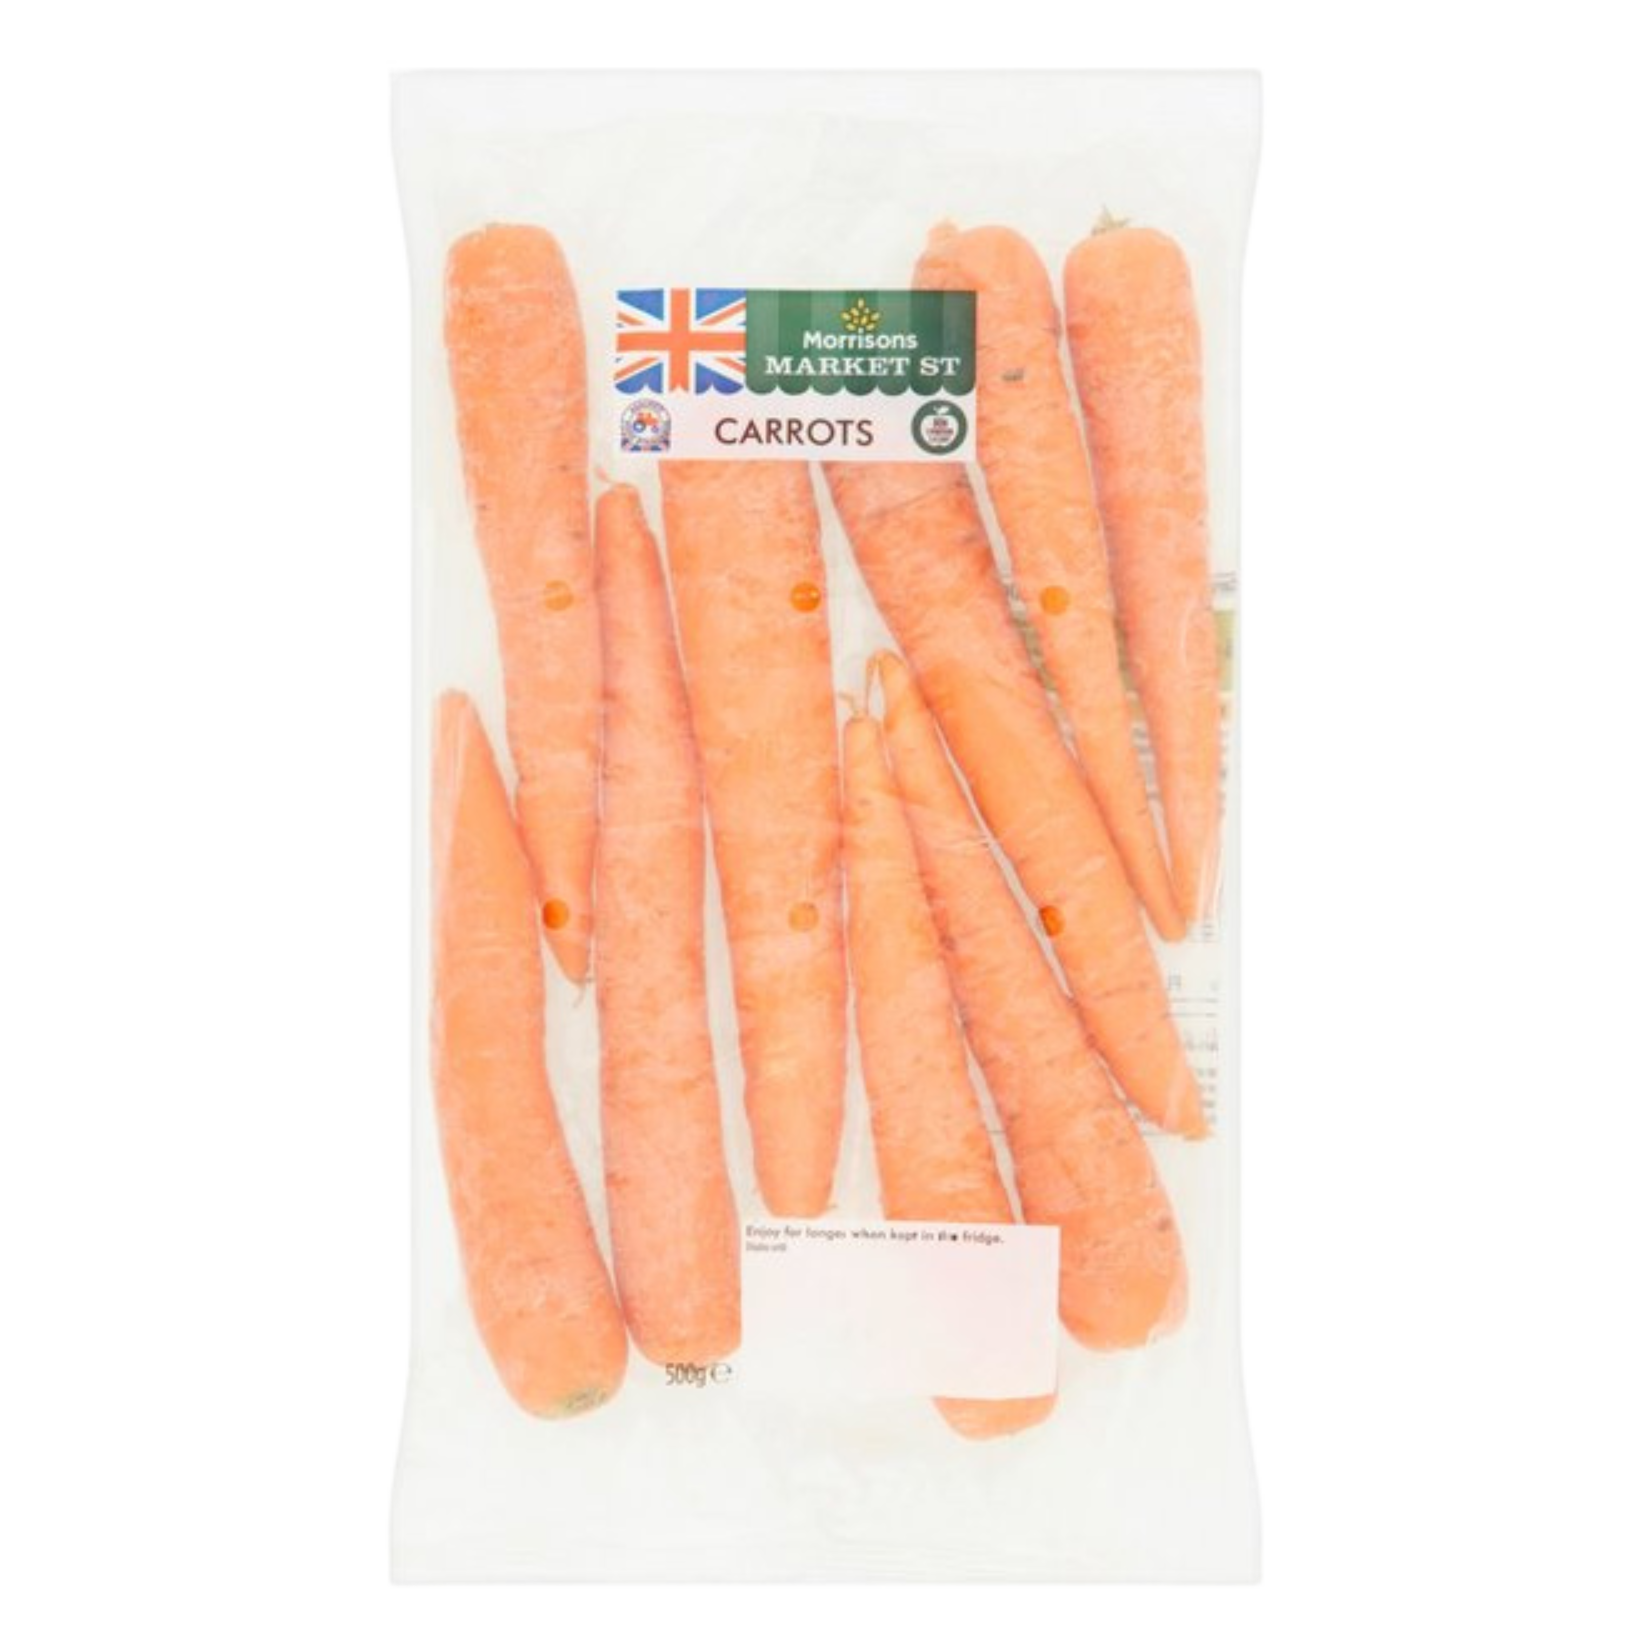 Morrisons Carrots, 500g